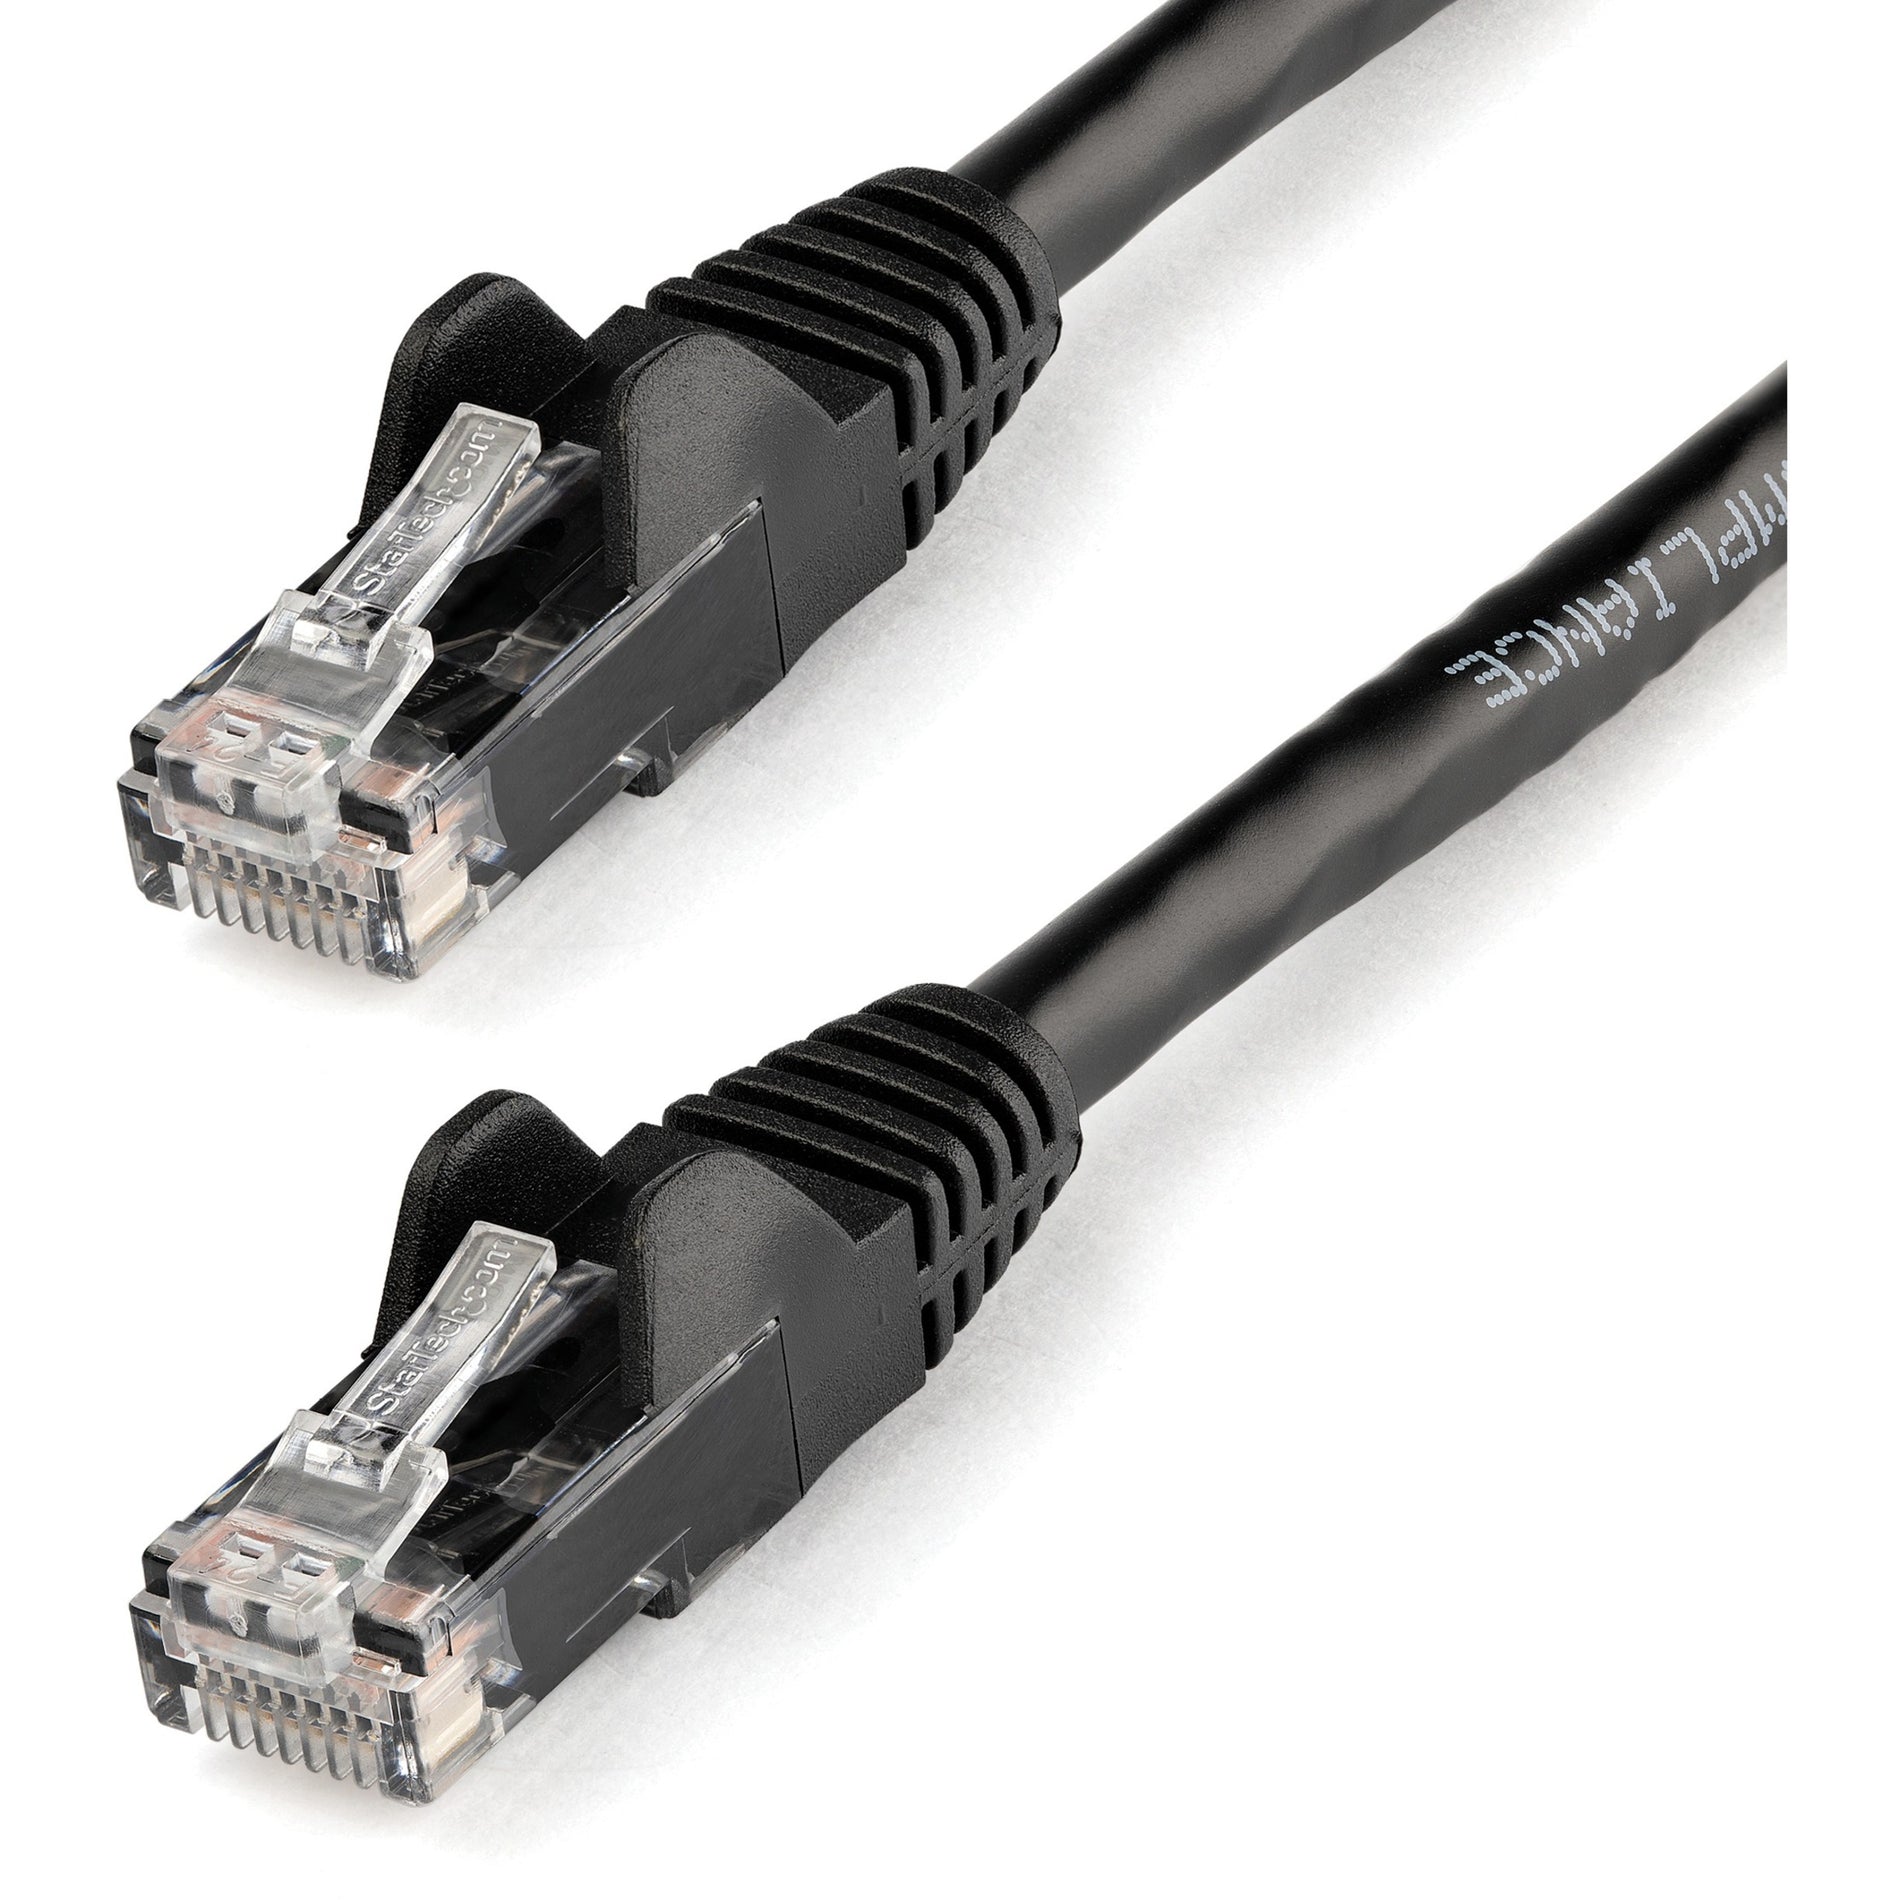 StarTech.com Cat. 6 Patch Network Cable - 15 ft - Black (N6PATCH15BK)